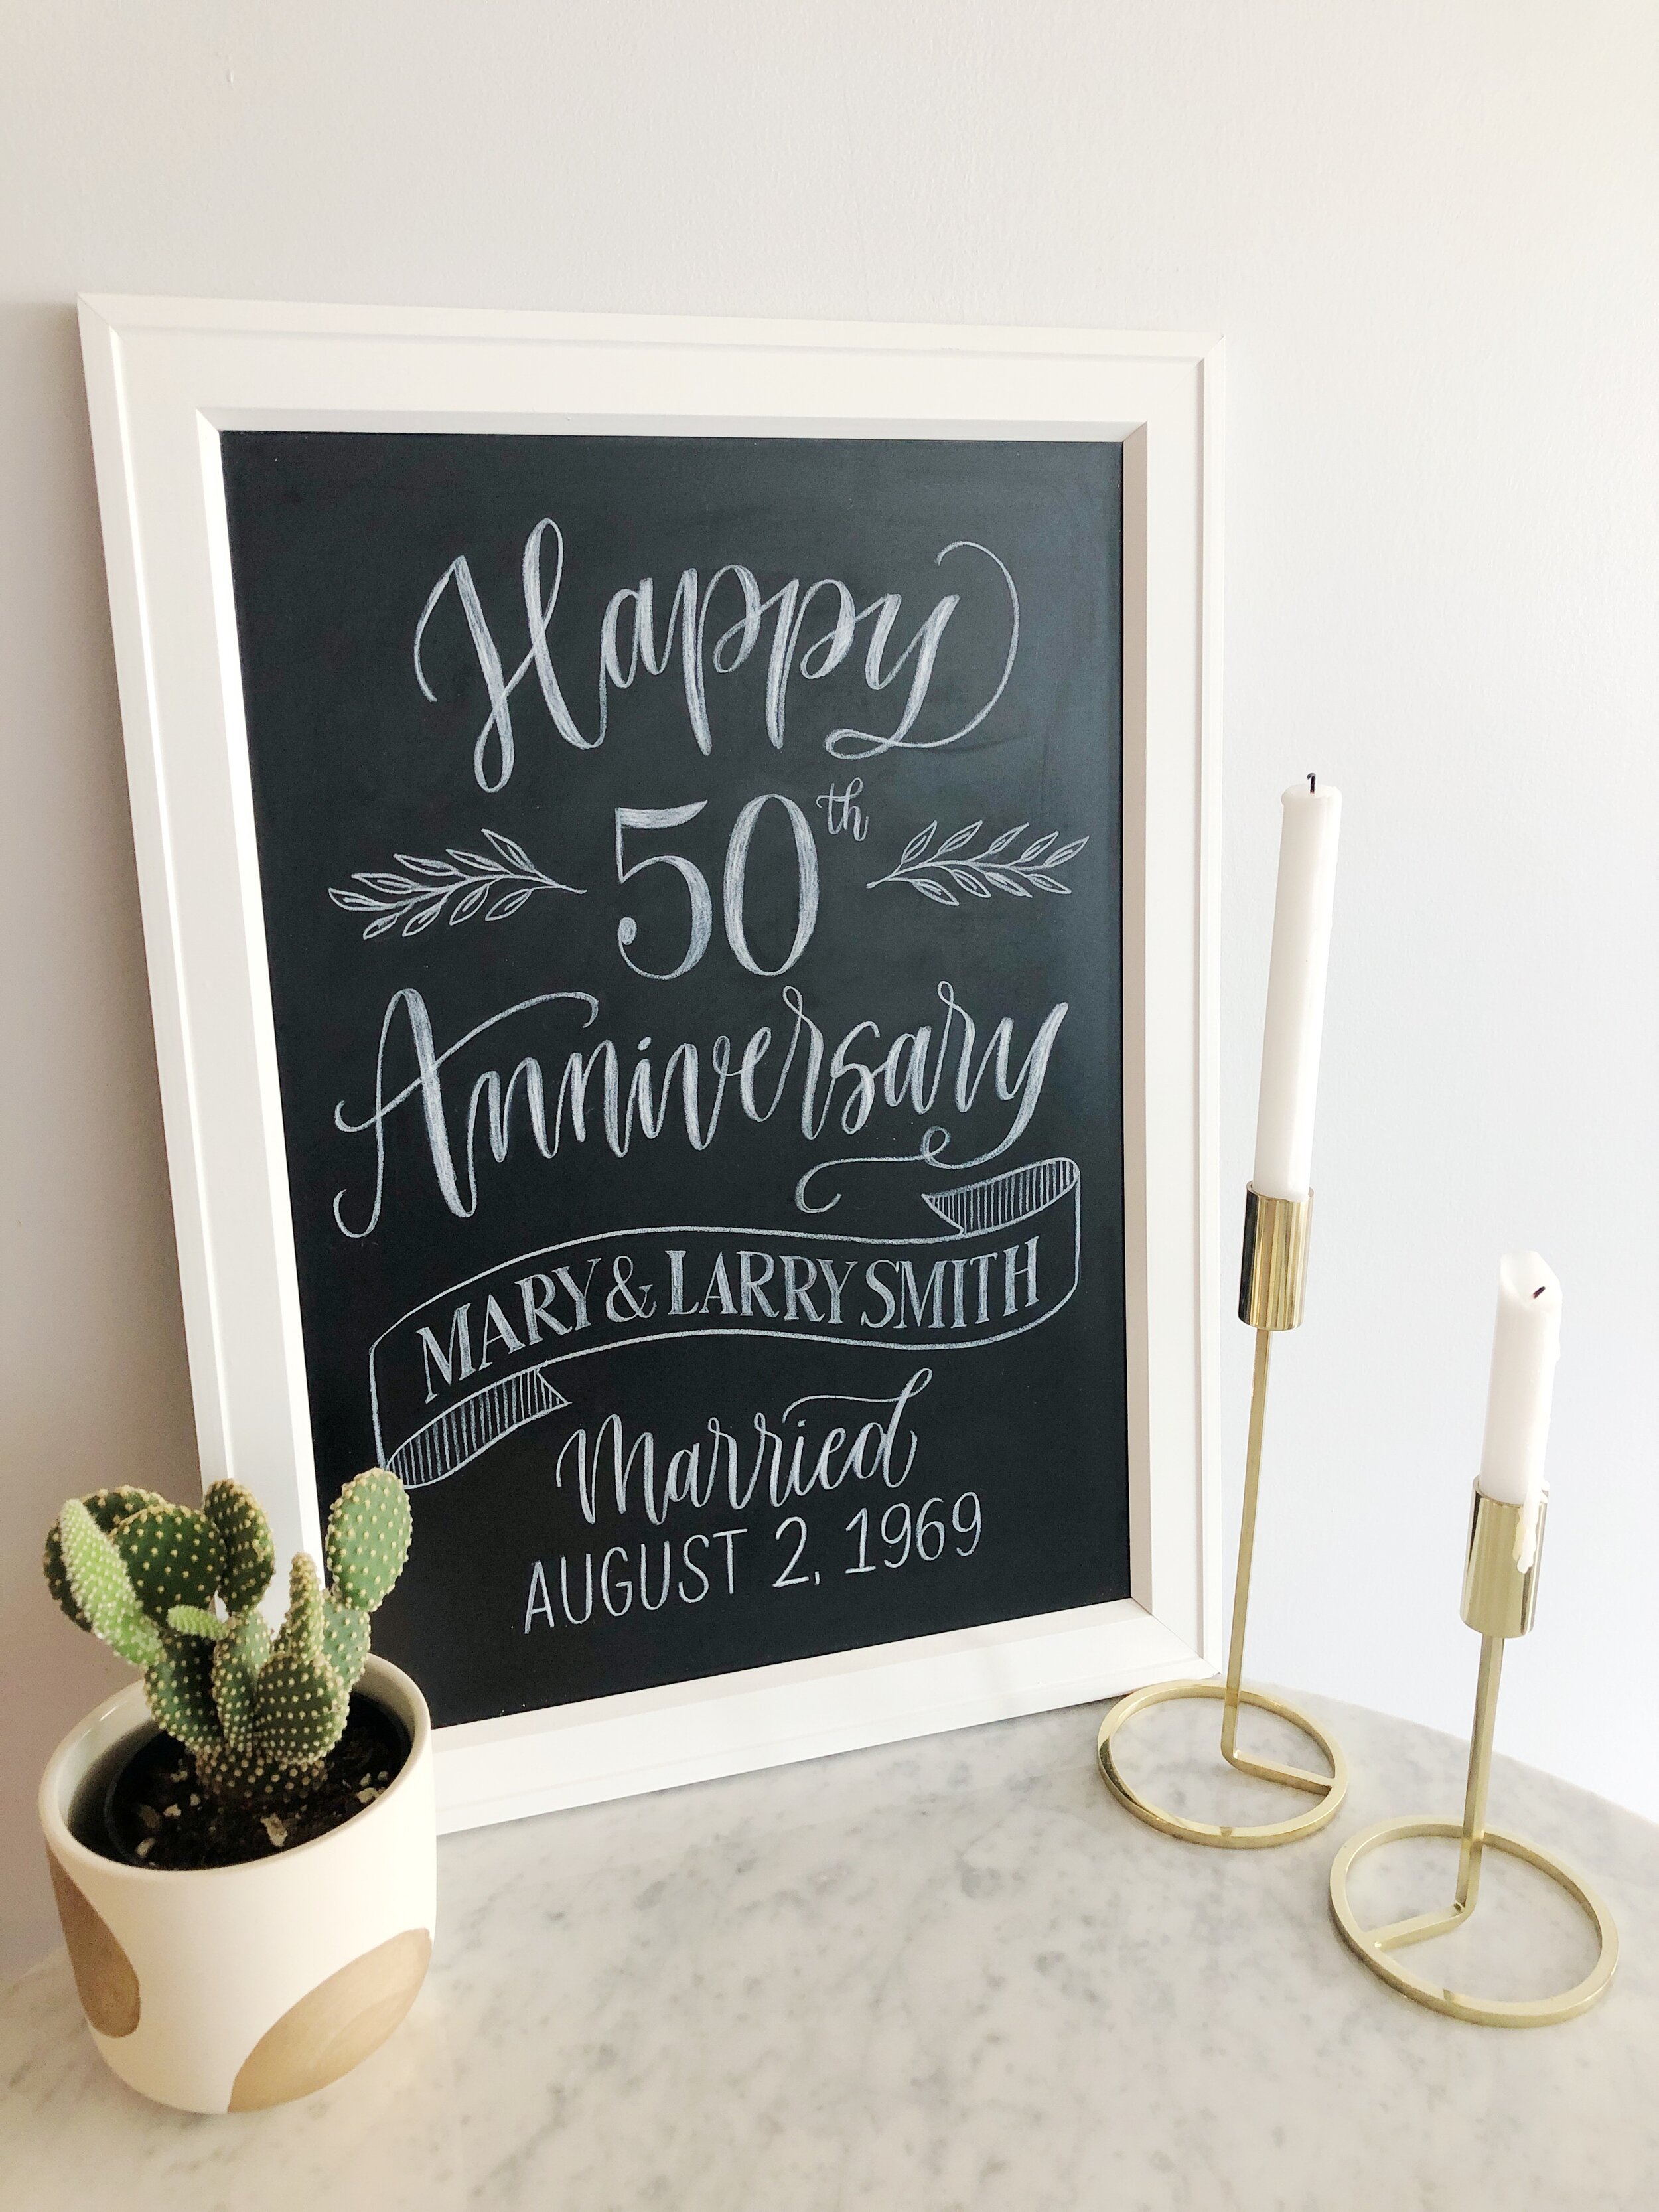 Custom chalkboard sign featuring a 50th wedding anniversary celebration